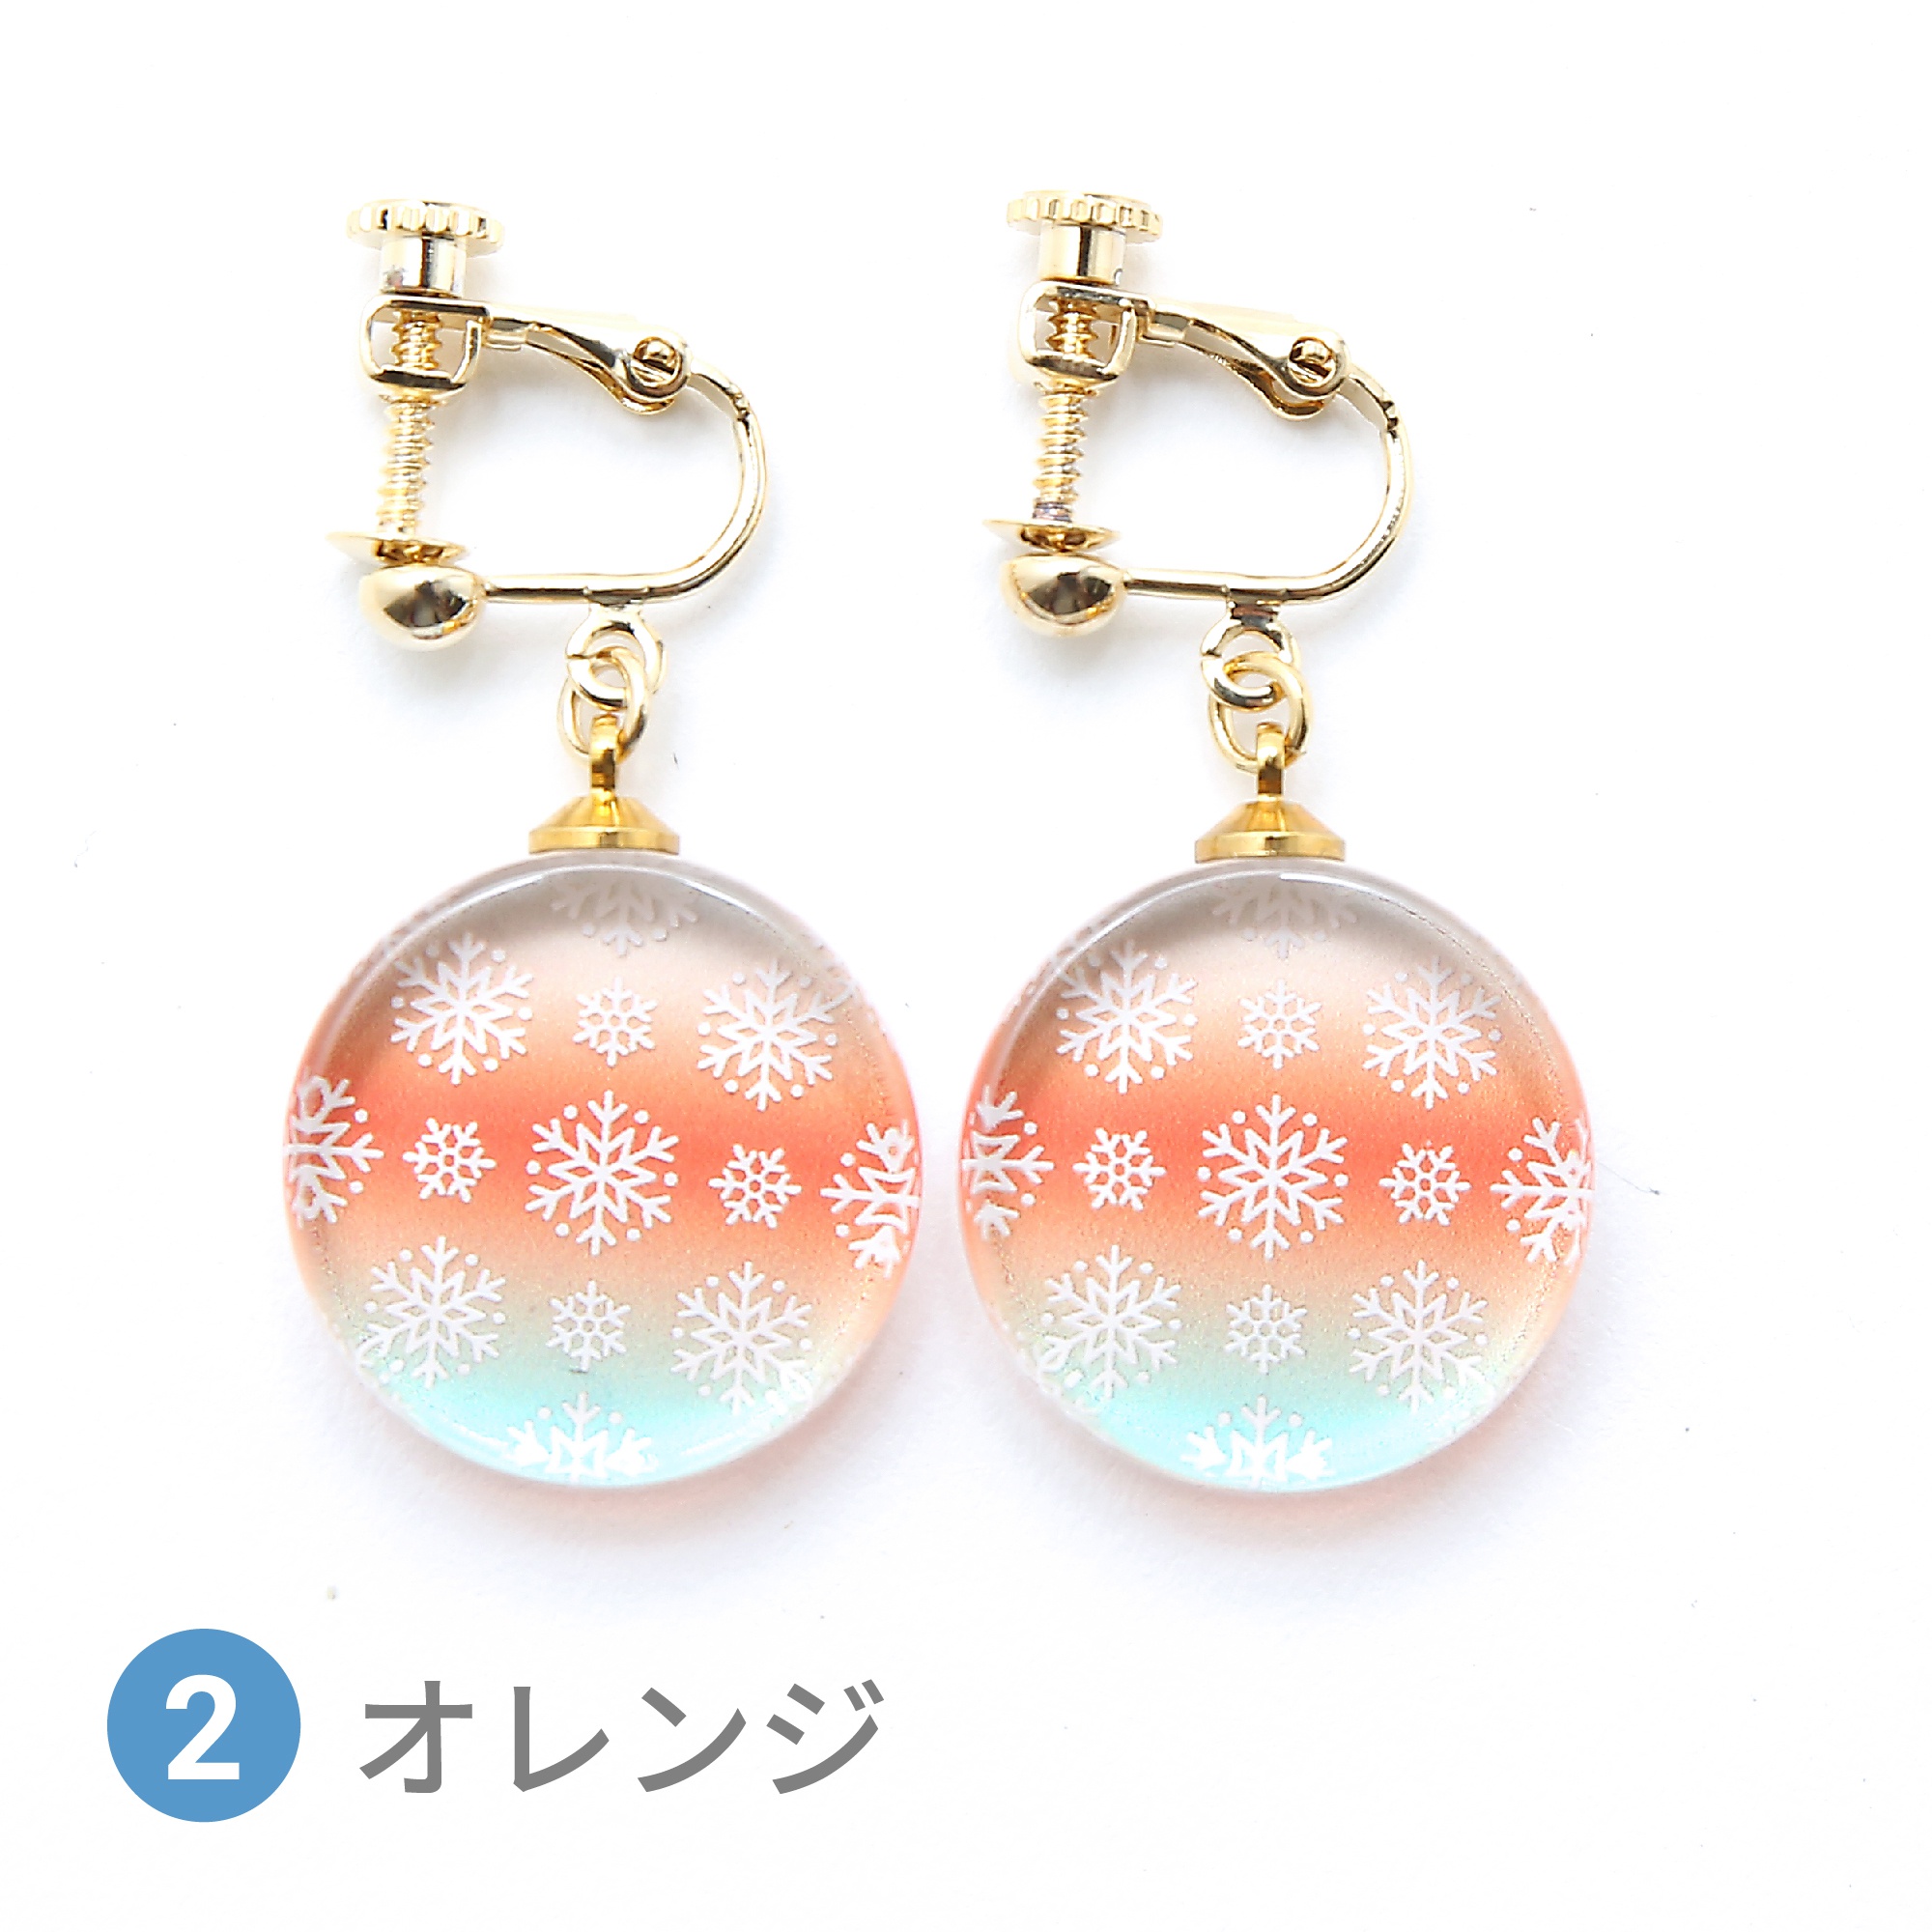 Glass accessories Earring snow flake orange round shape